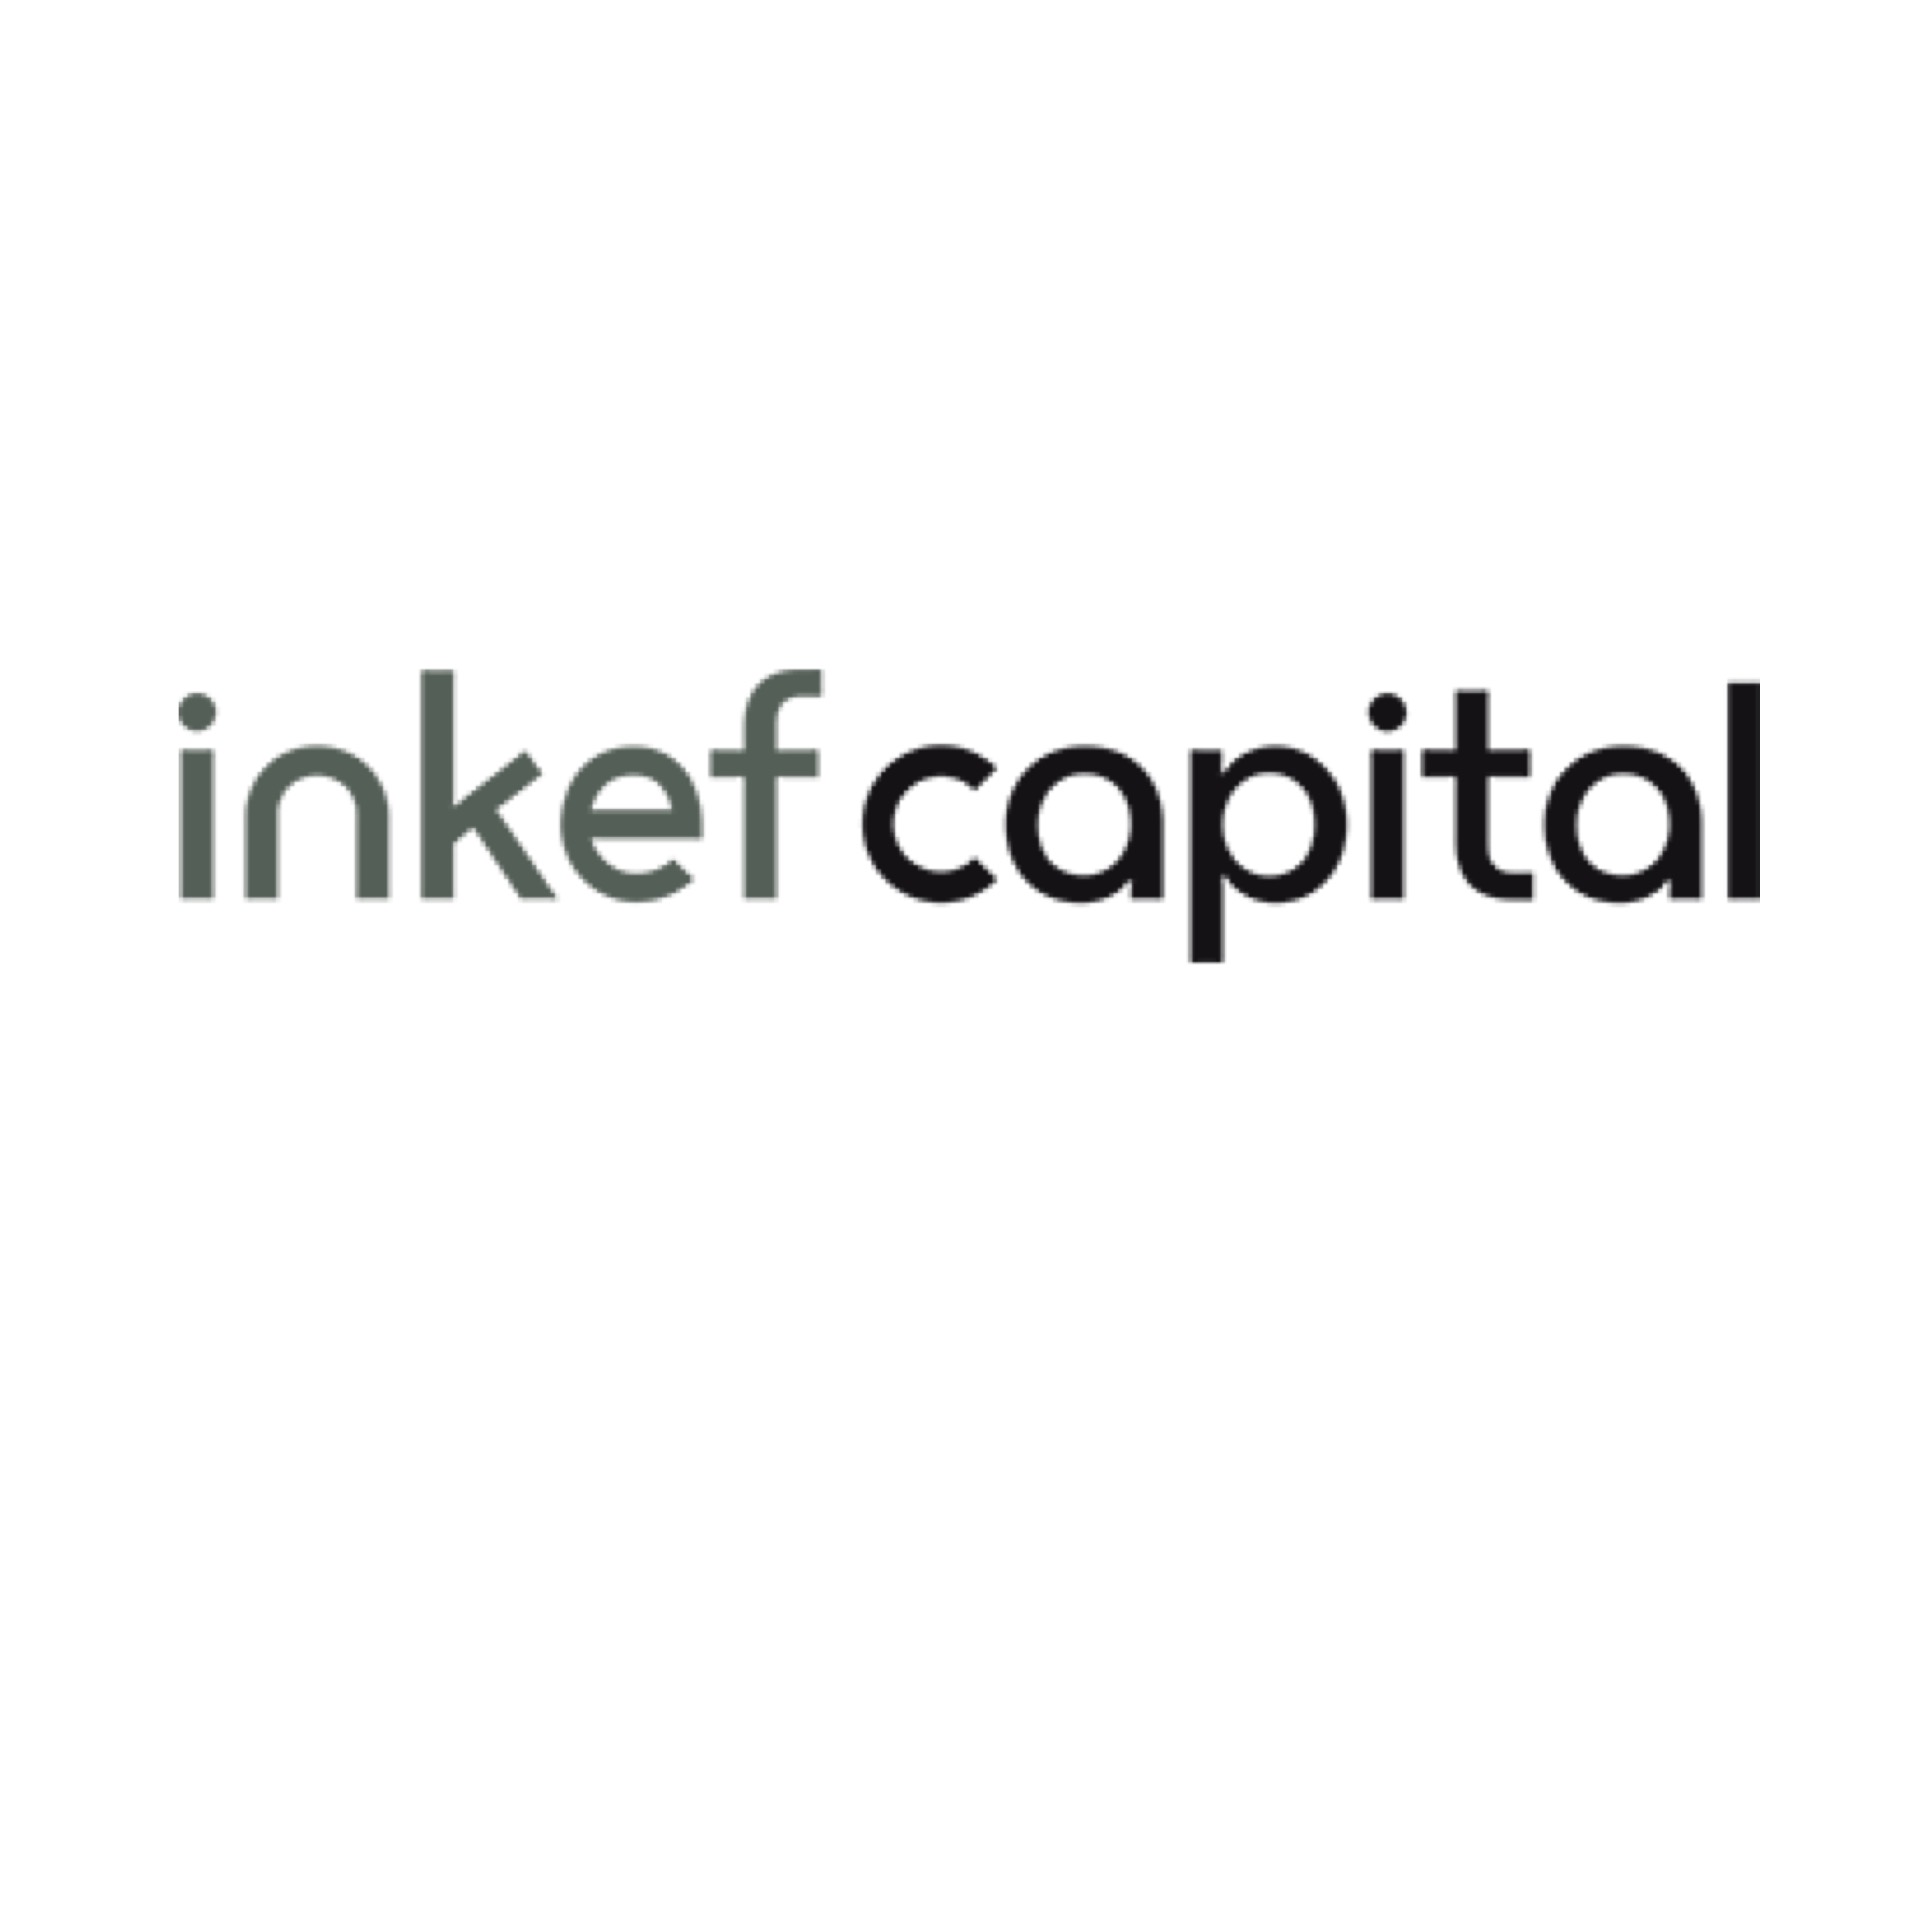 Inkef Capital